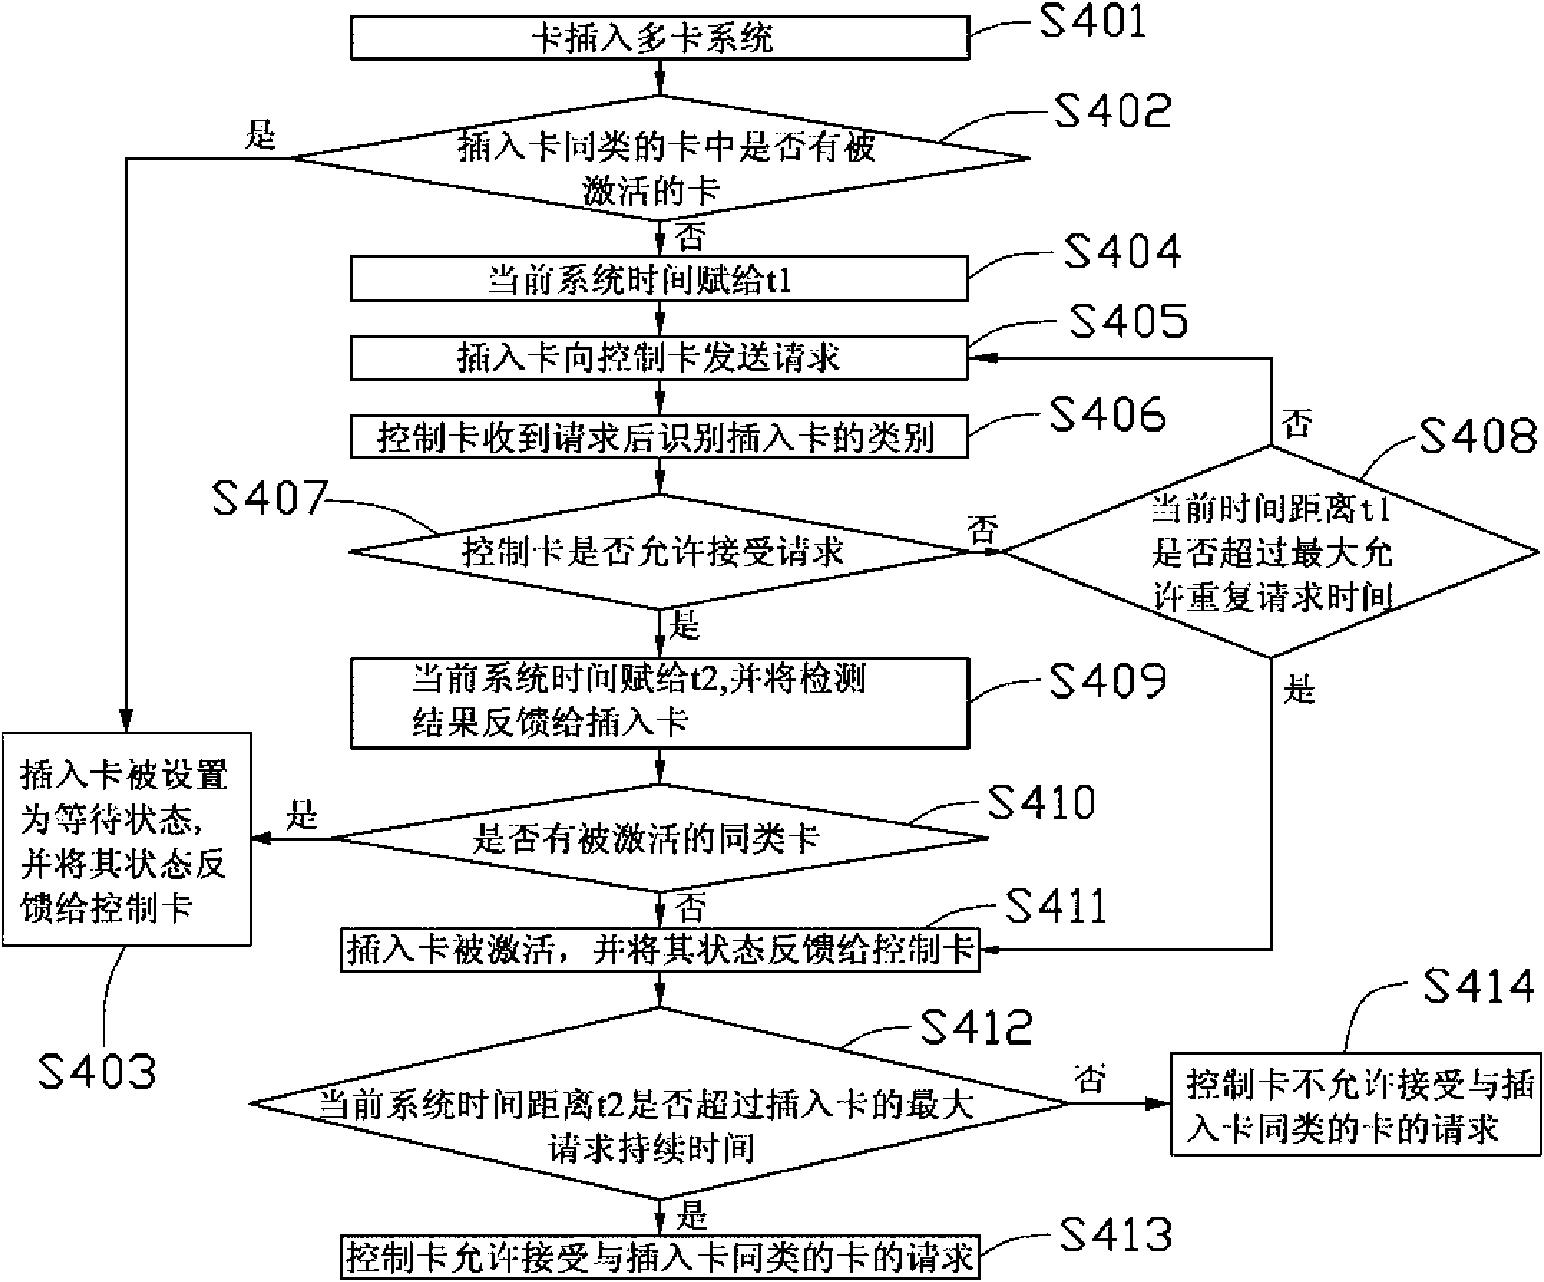 Control method of multi-card system